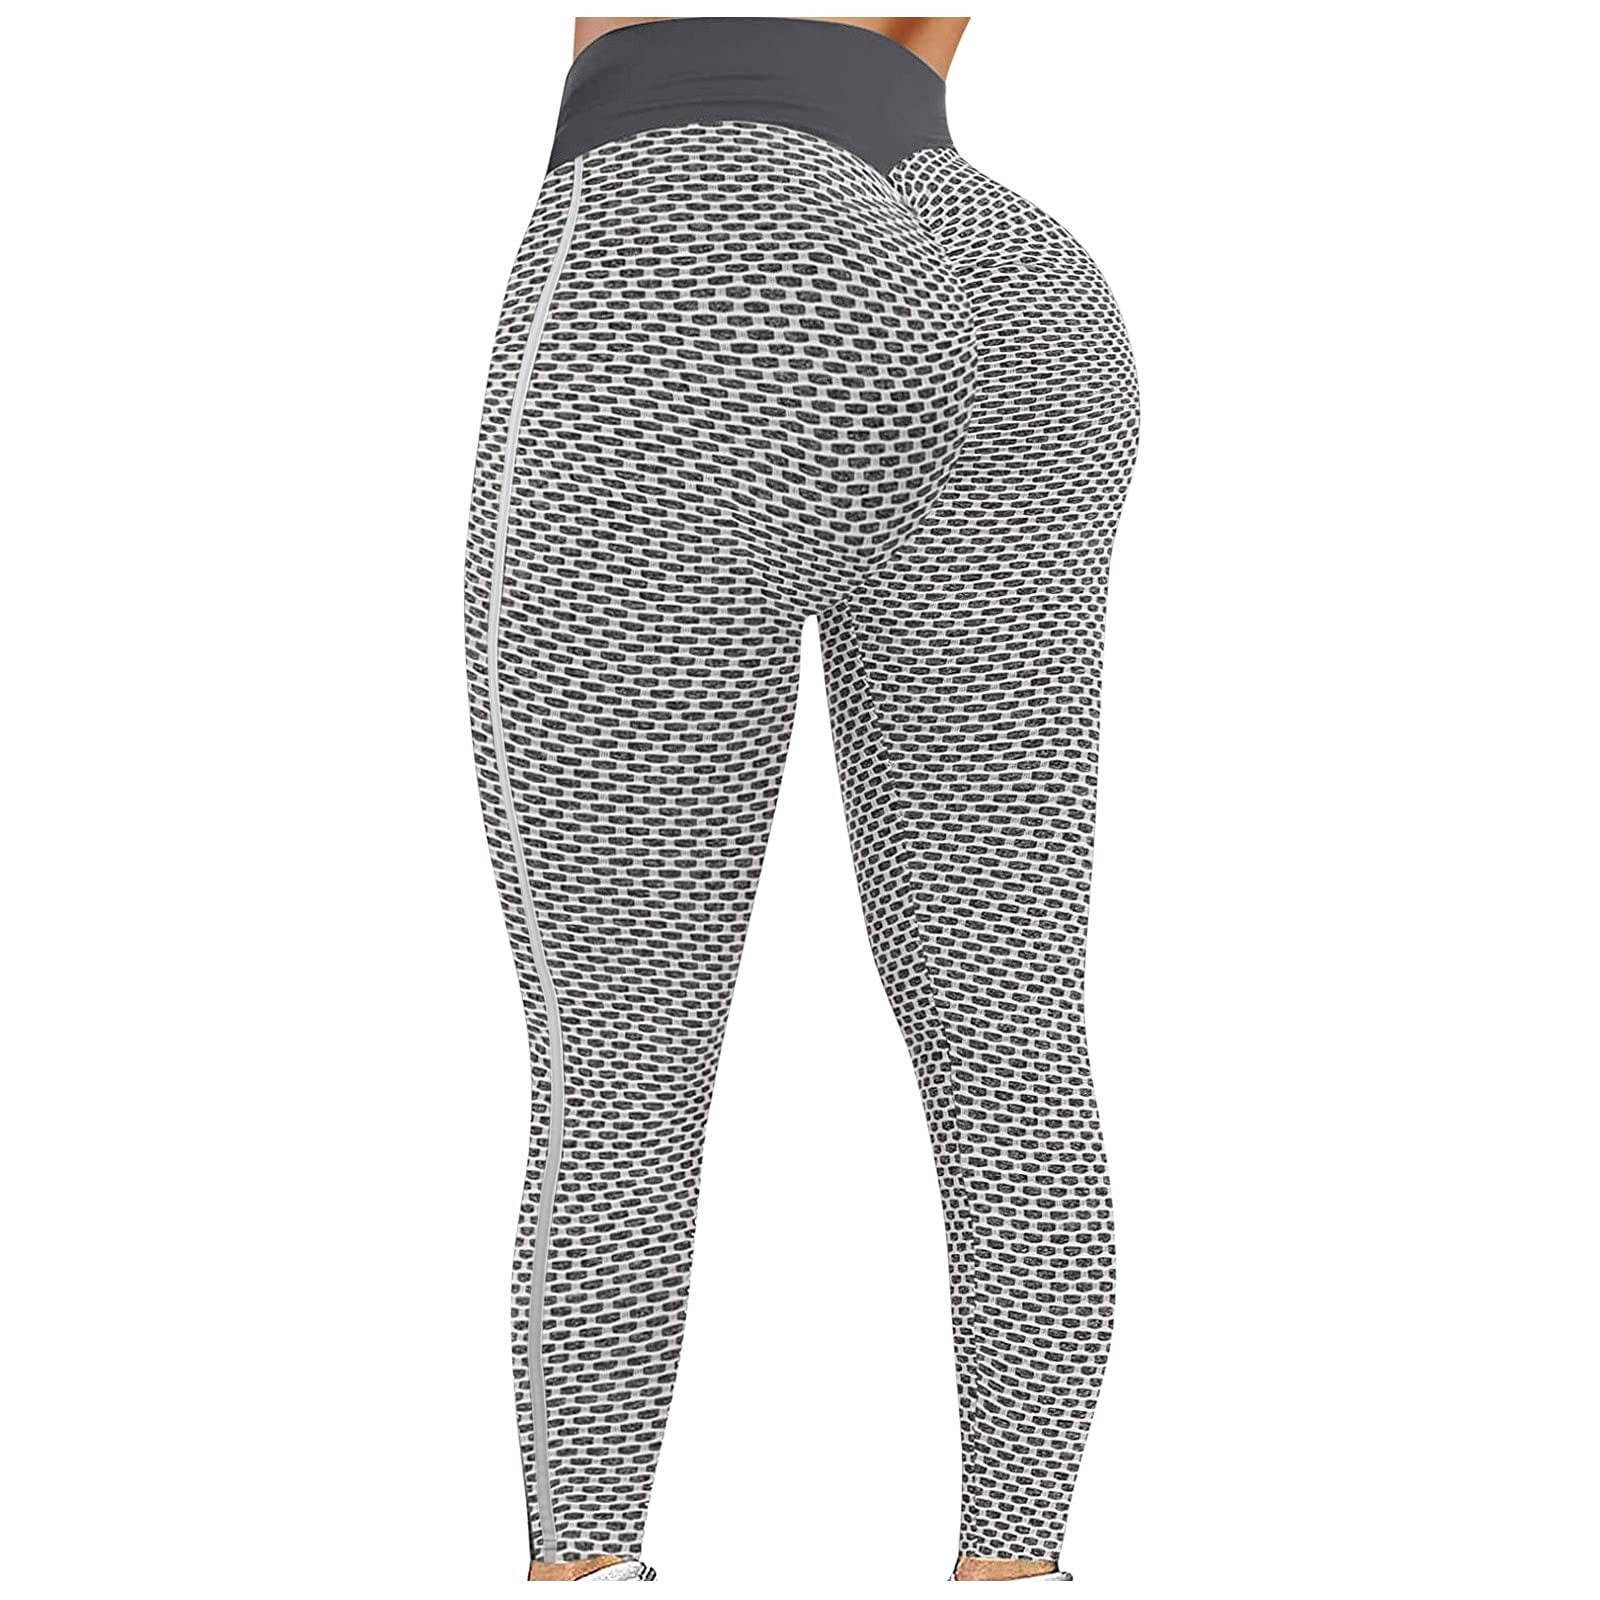 Mrat Yoga Full Length Pants Petite Pants for Office Ladies Scrunch